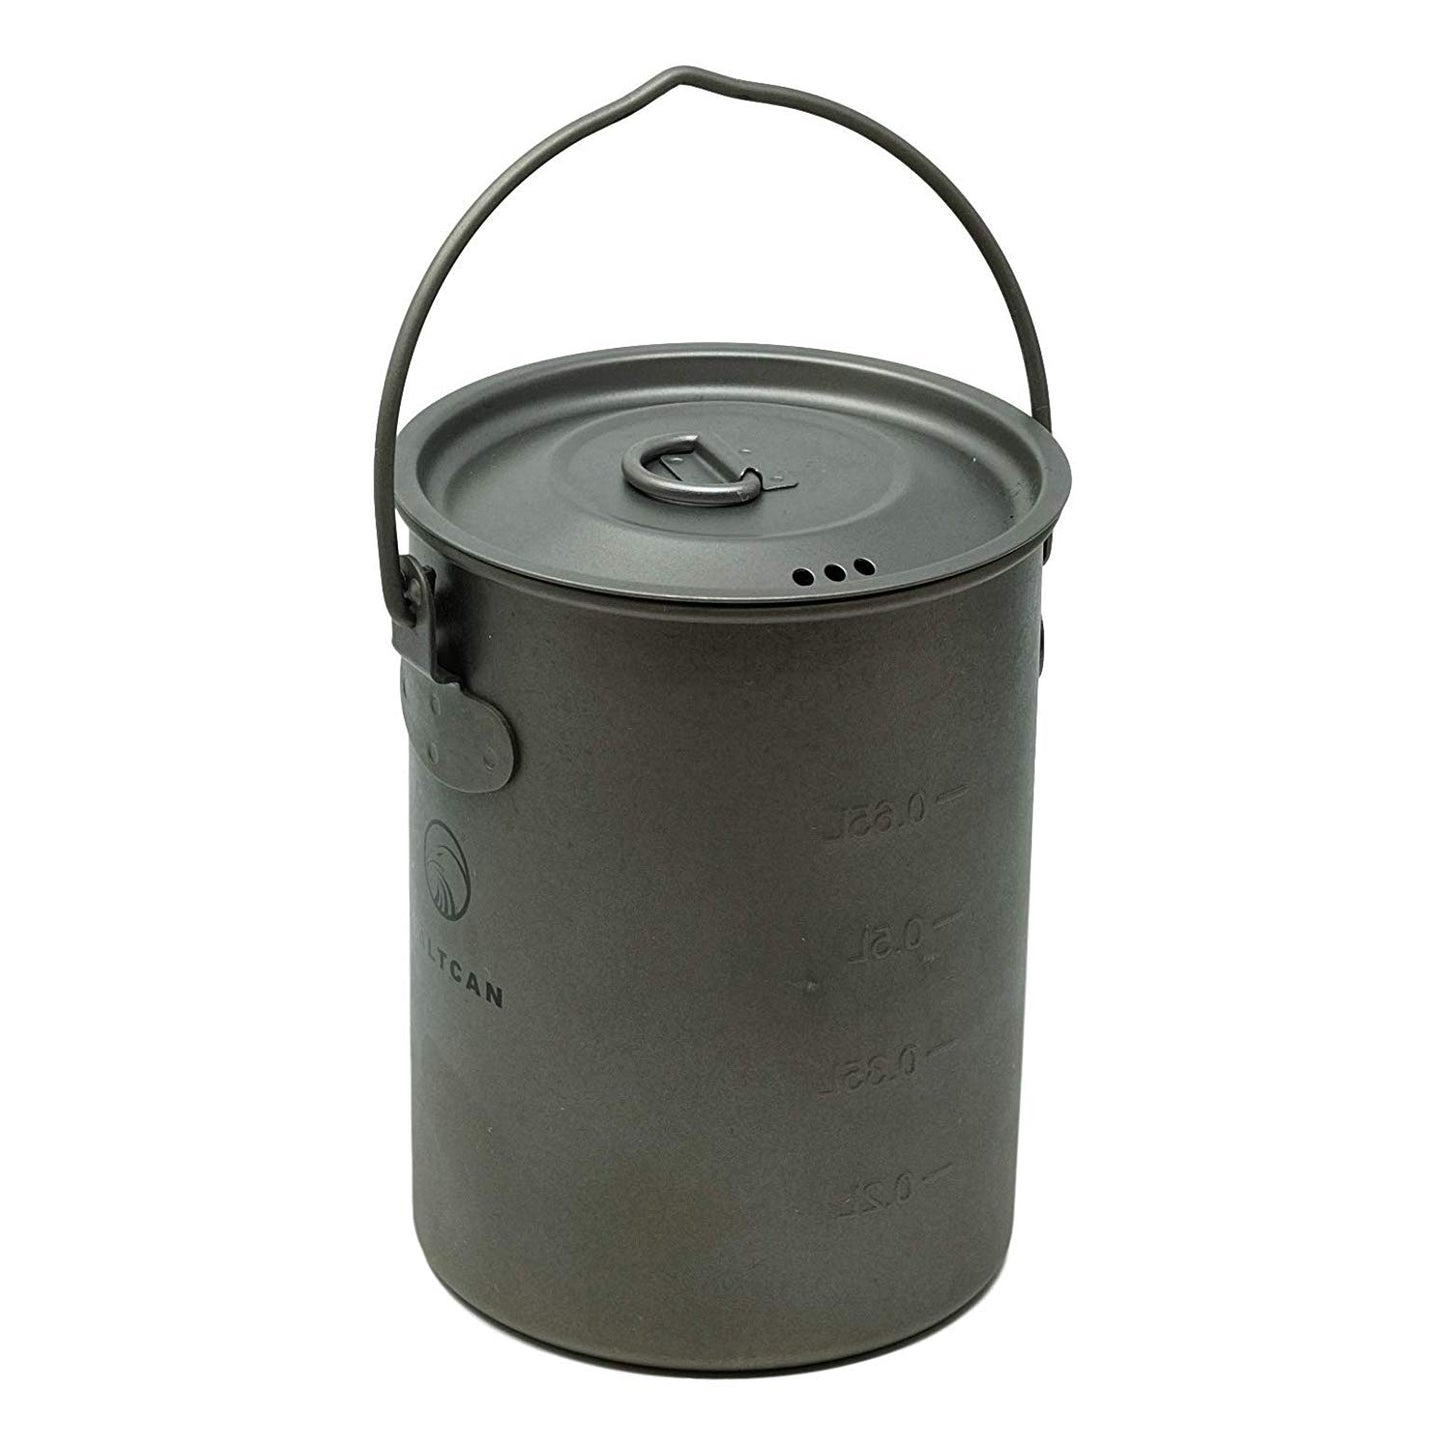 Valtcan Thunderbolt Titanium 900ml Pot Mug 34 fl oz Coffe Cup with Lid and Stuff Sack 134g